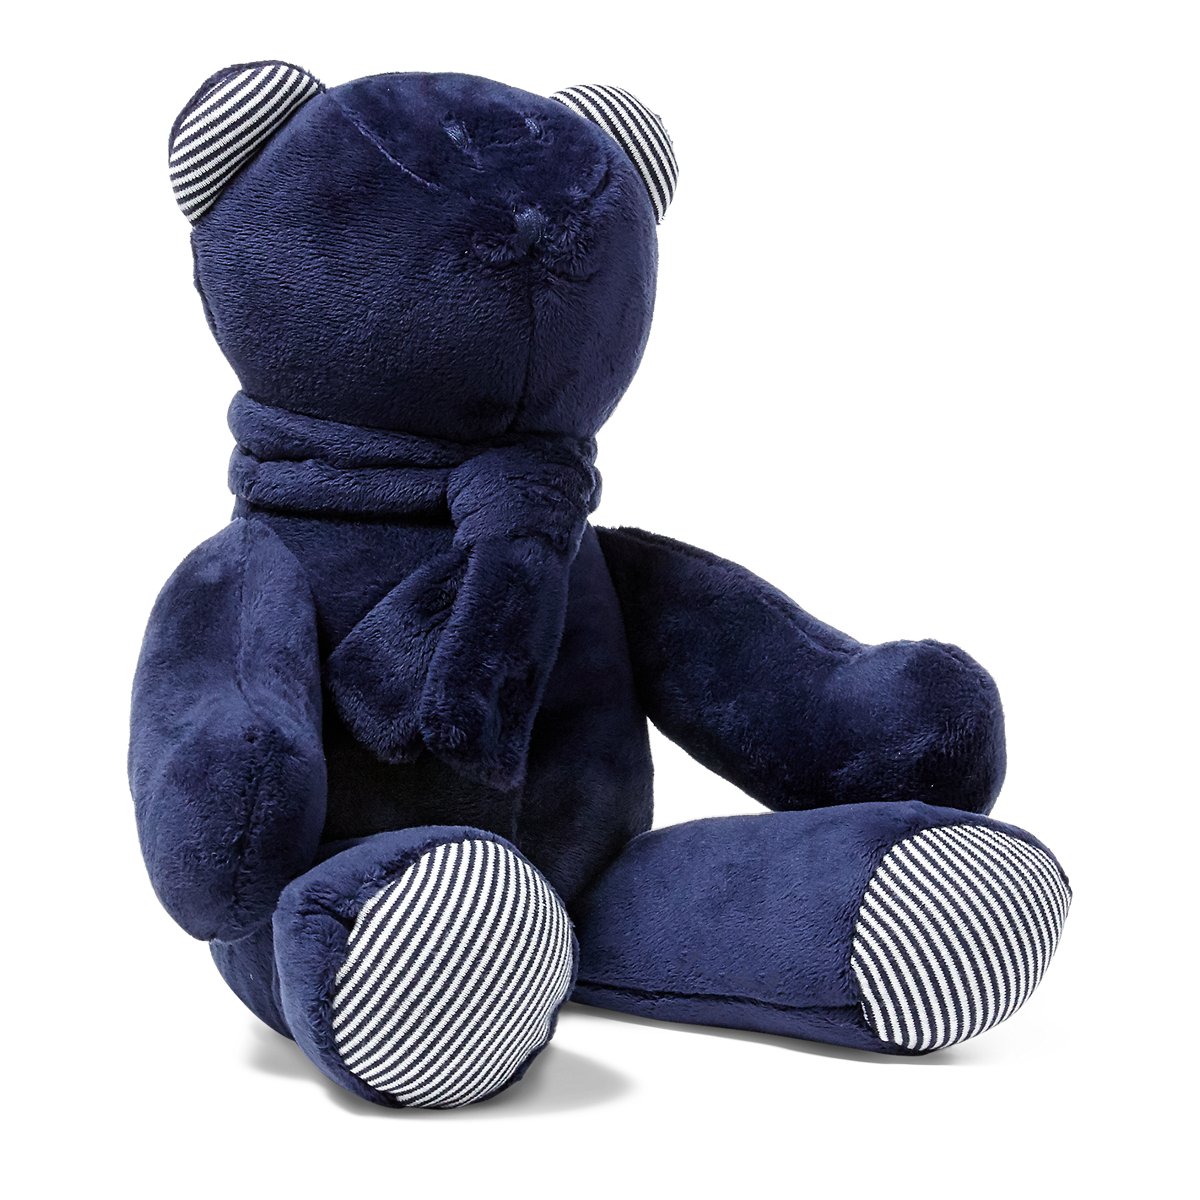 Ralph Lauren Polo Bear Plush Stuffed Animal Tuxedo Teddy 2022-23